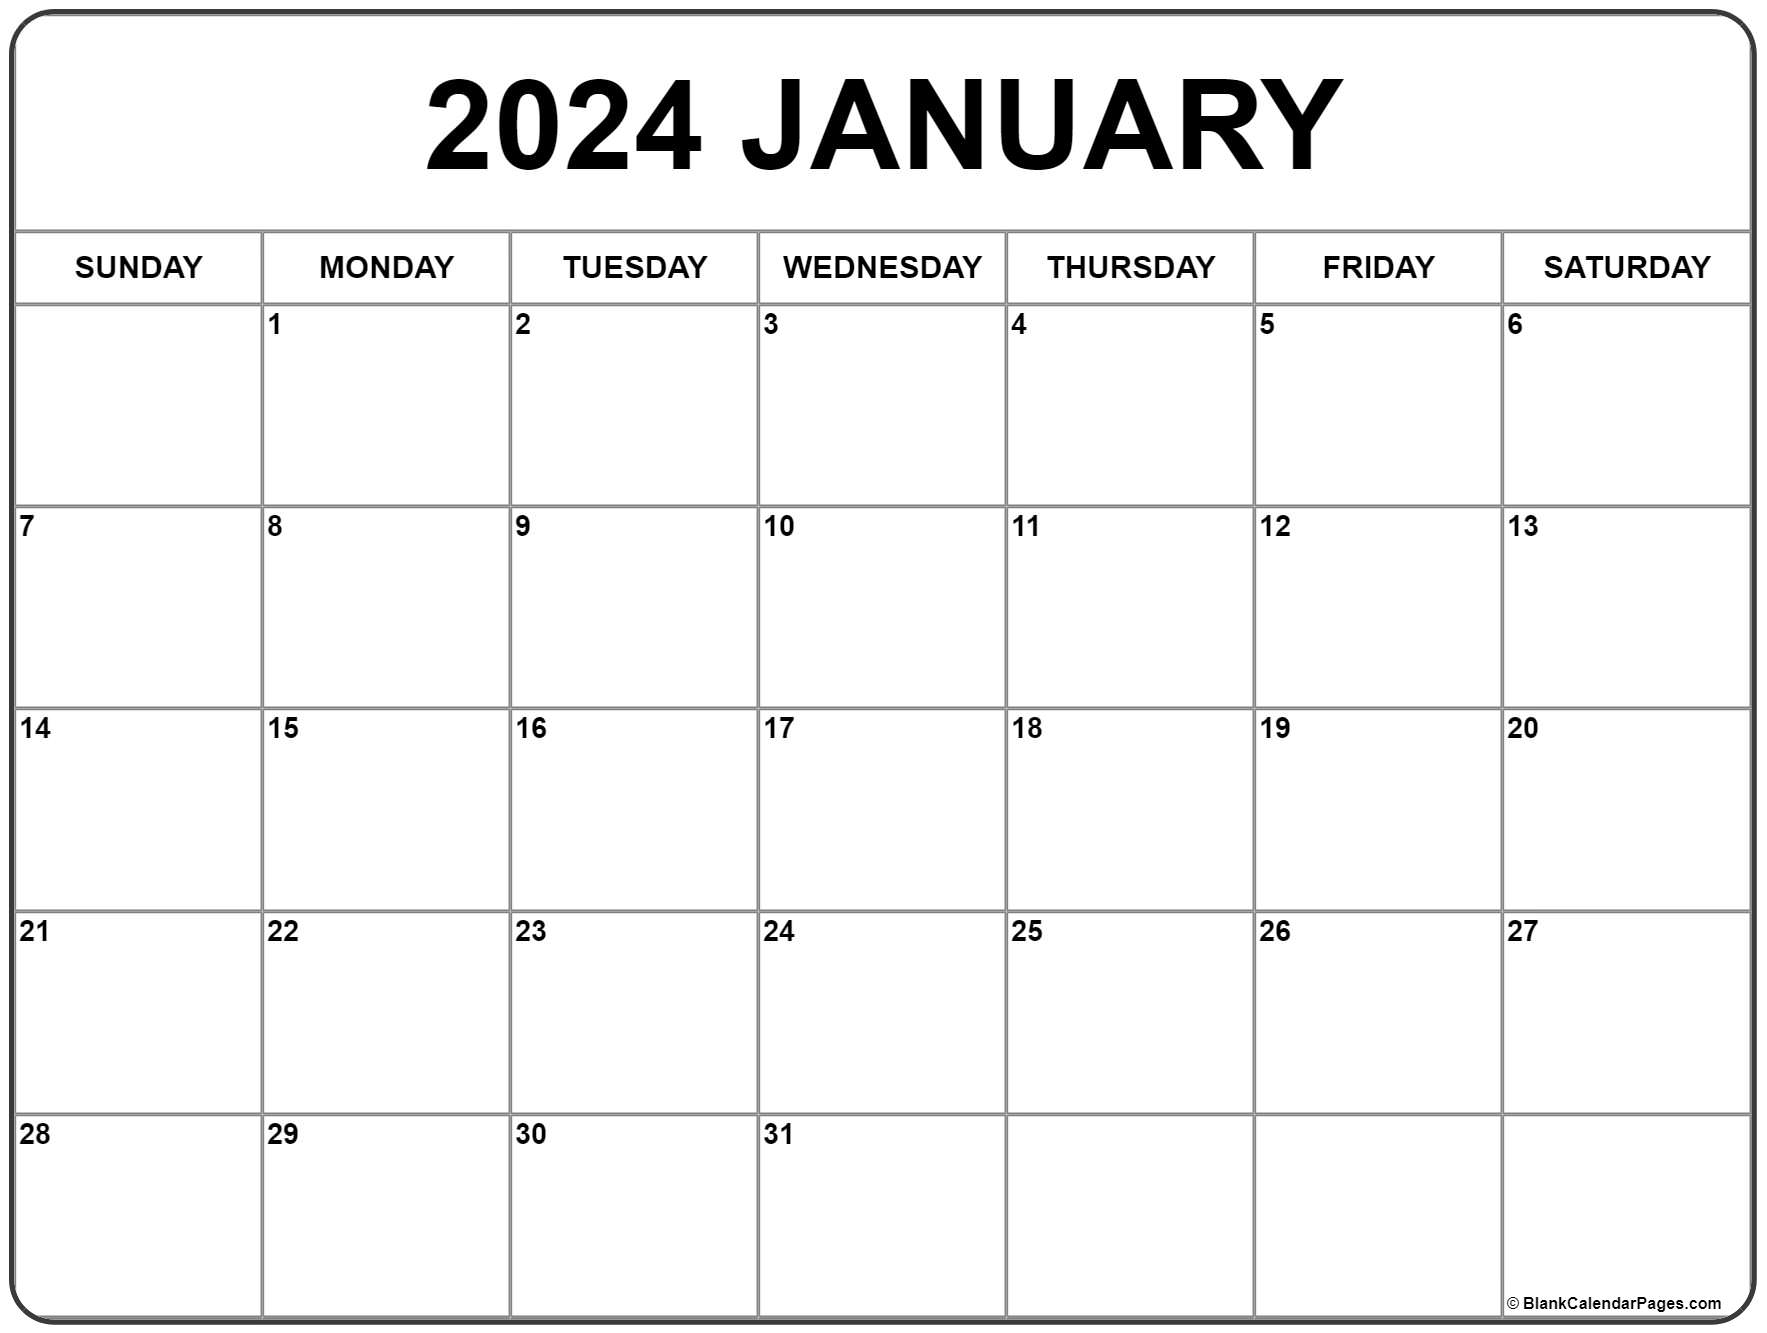 January Schedule 2022 January 2022 Calendar | Free Printable Calendar Templates